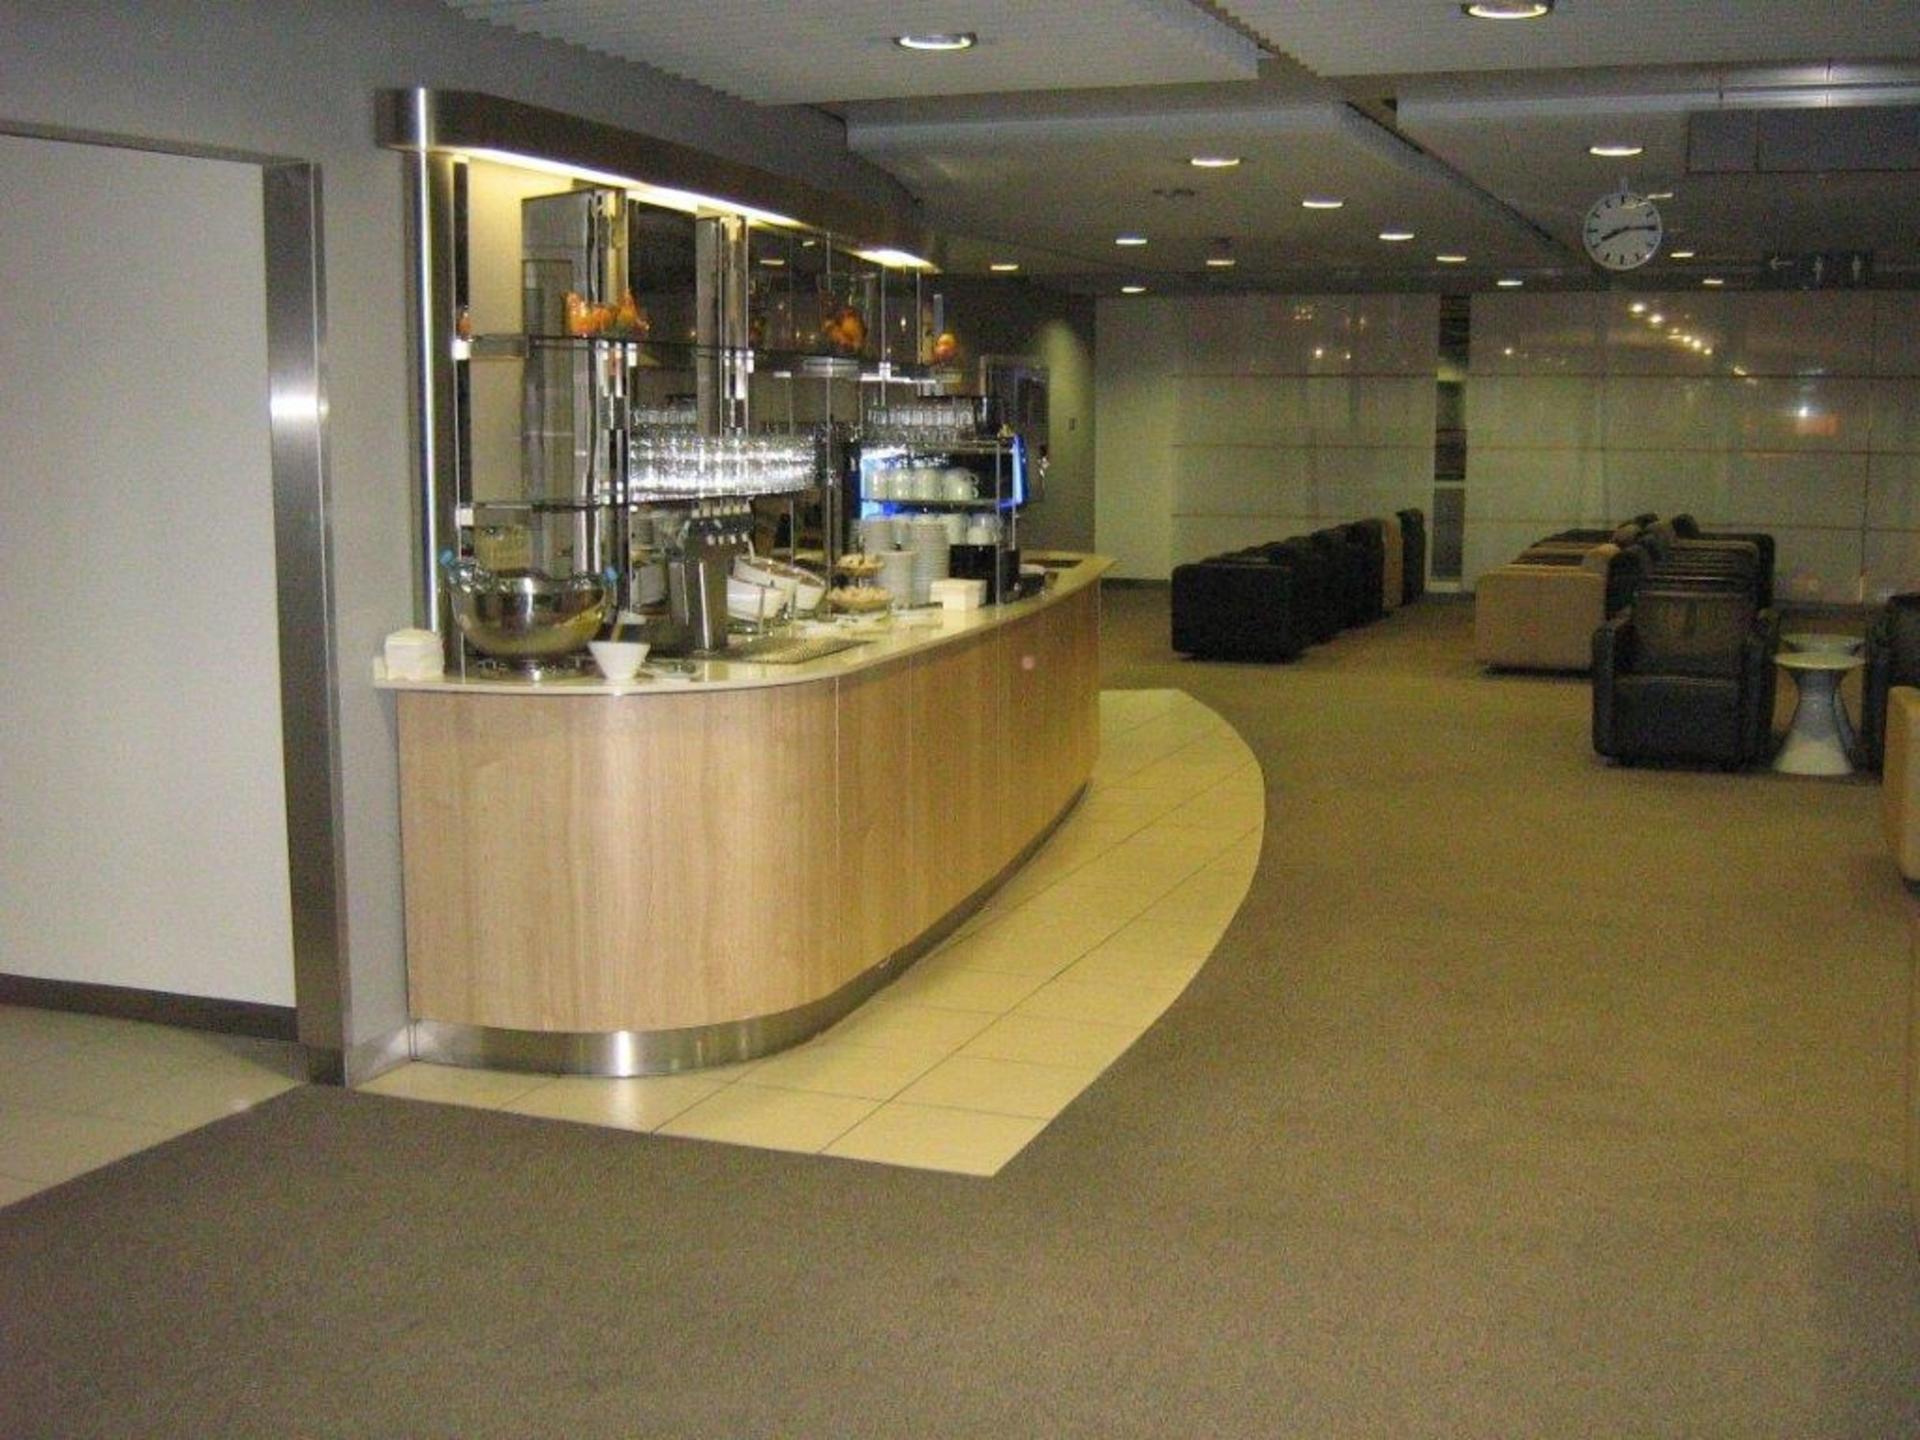 Lufthansa Business Lounge image 9 of 22